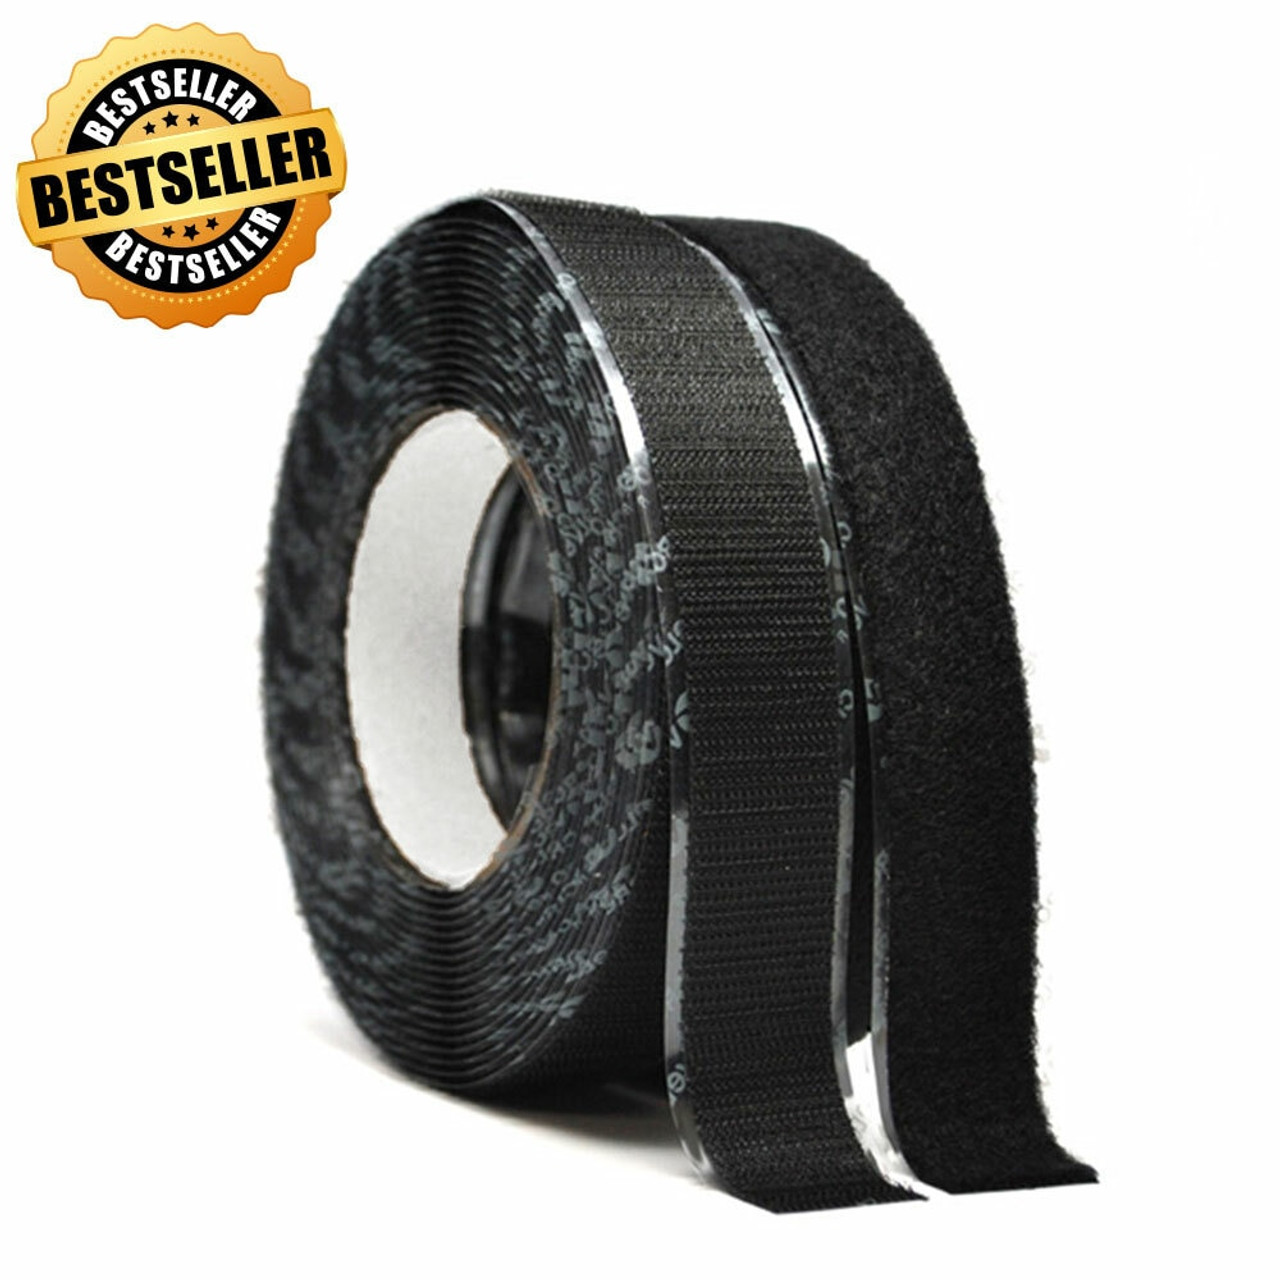 VELCRO® Brand Industrial Strength Black Adhesive Roll